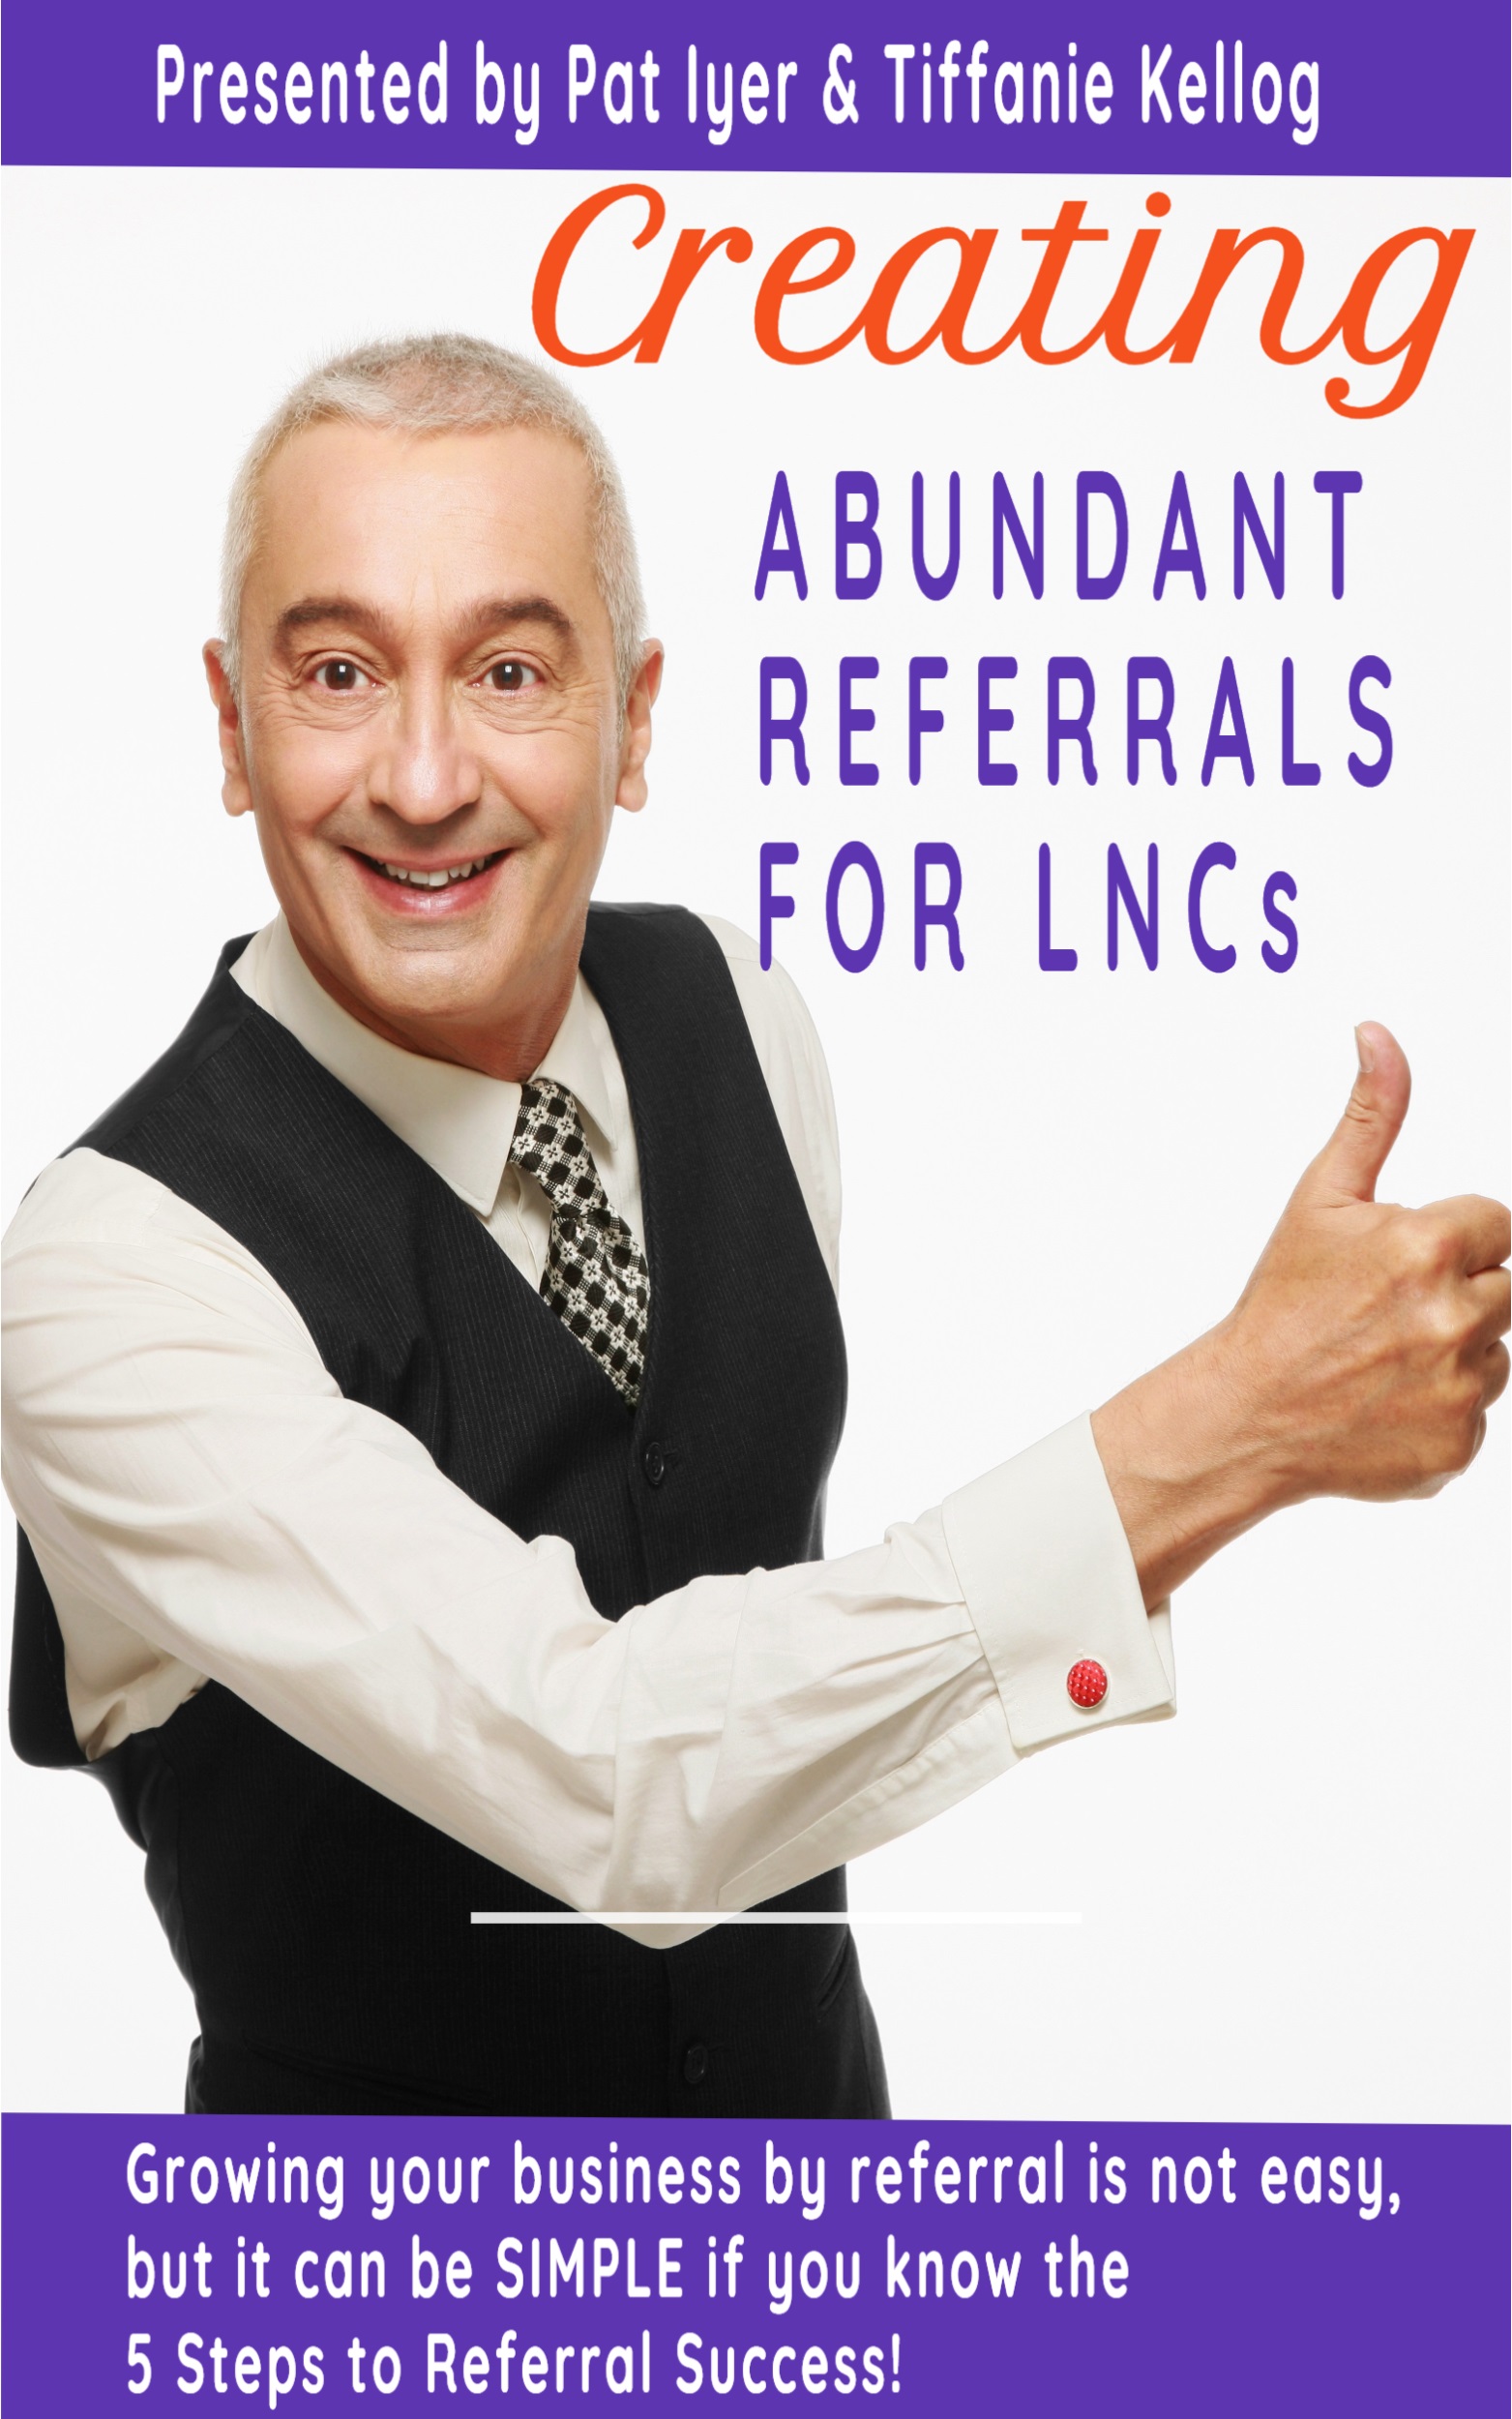 Creating Abundant Referrals for LNCs23